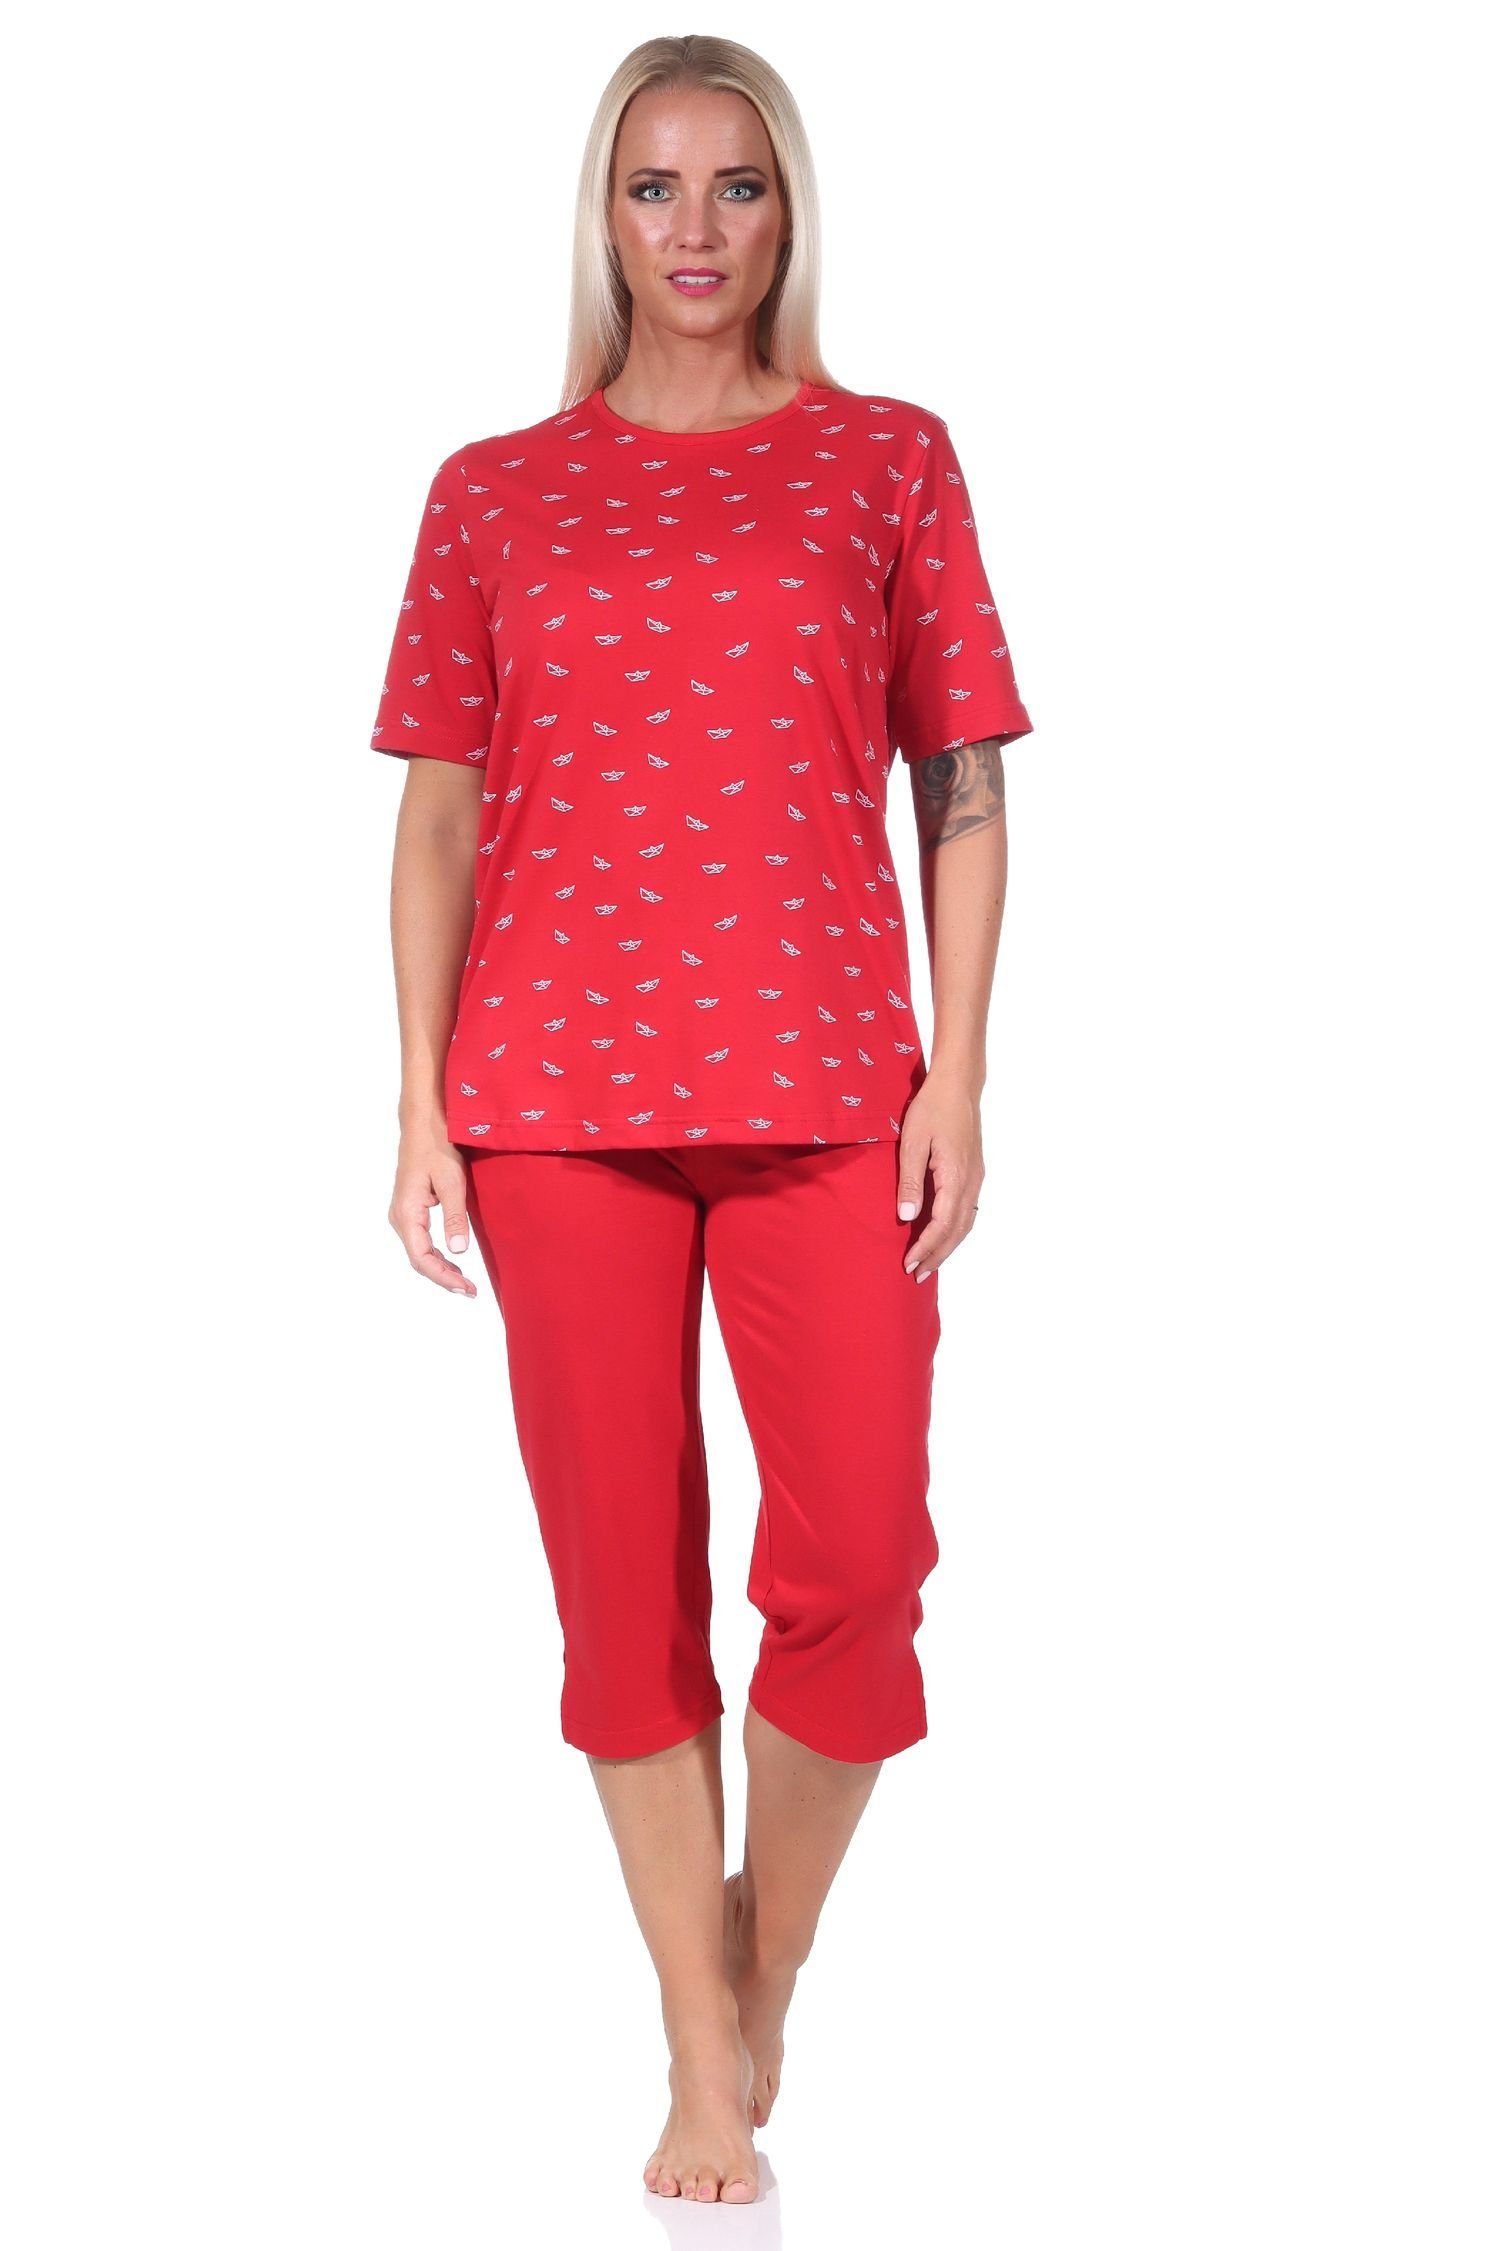 Normann Pyjama Damen kurzarm Schlafanzug mit Caprihose Pyjama in maritimer Optik rot